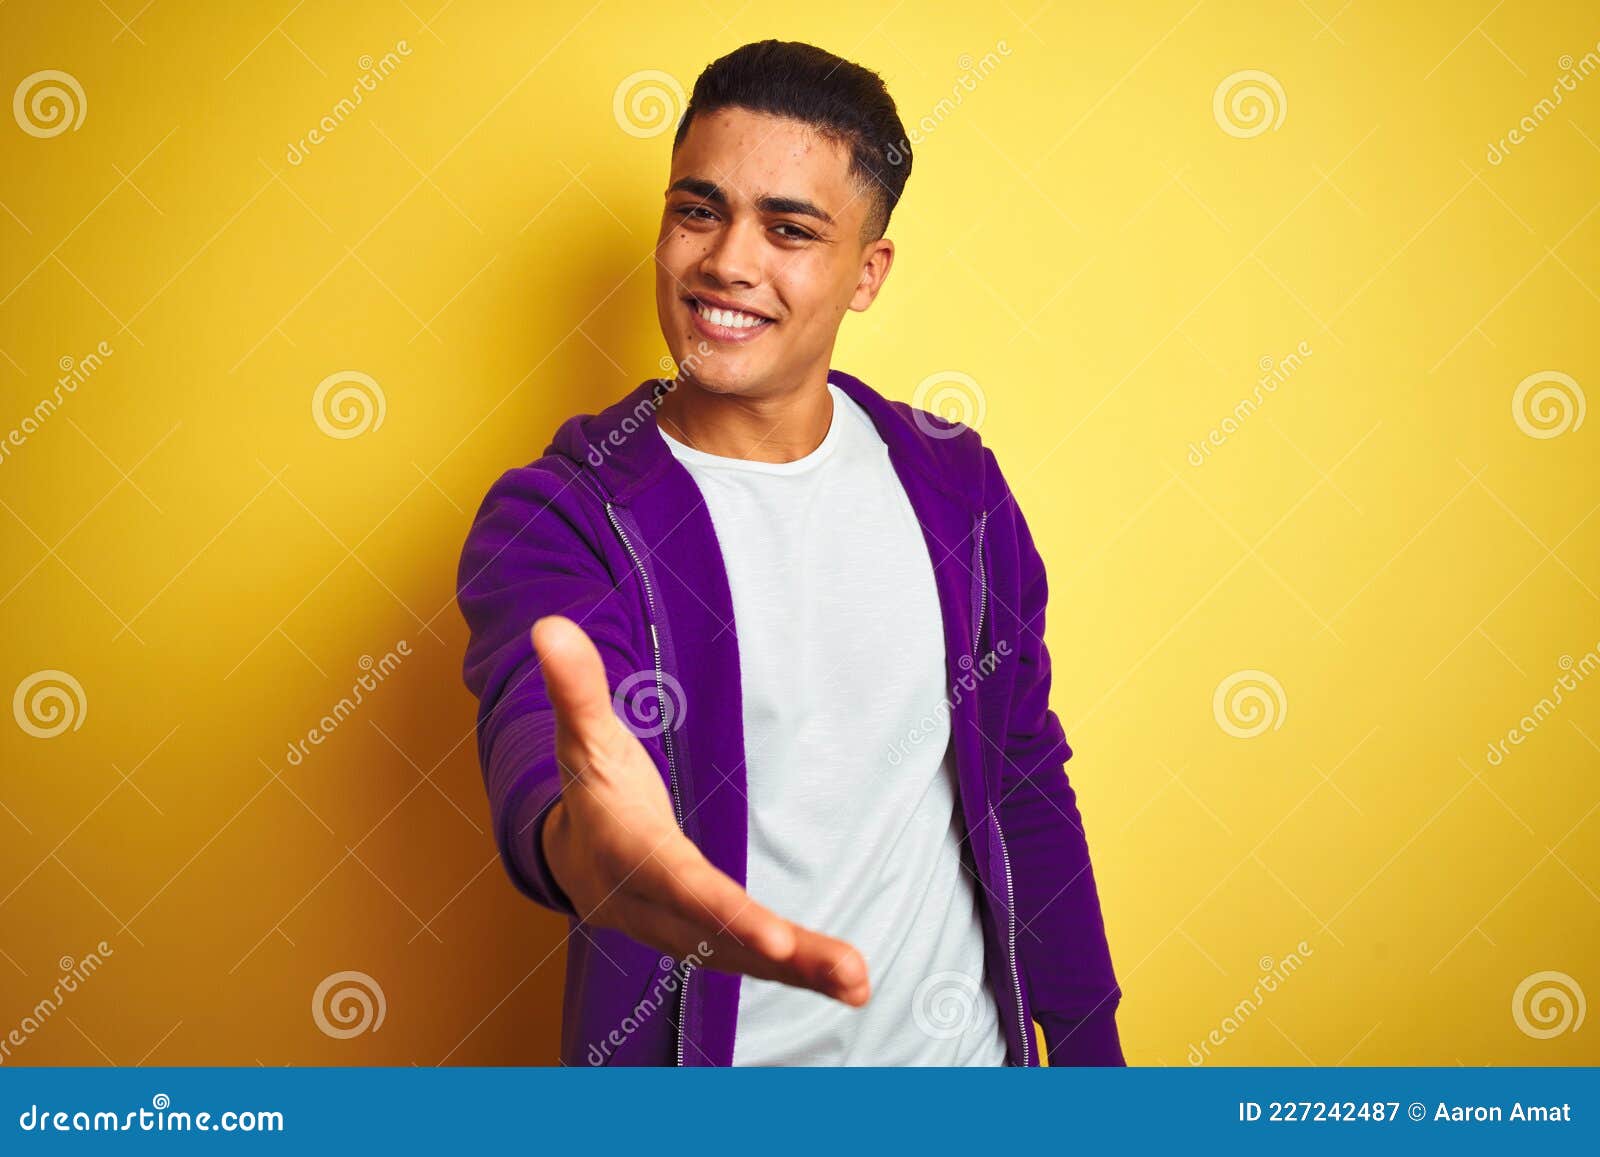 young brazilian man wearing purple sweatshirt standing over  yellow background smiling friendly offering handshake as